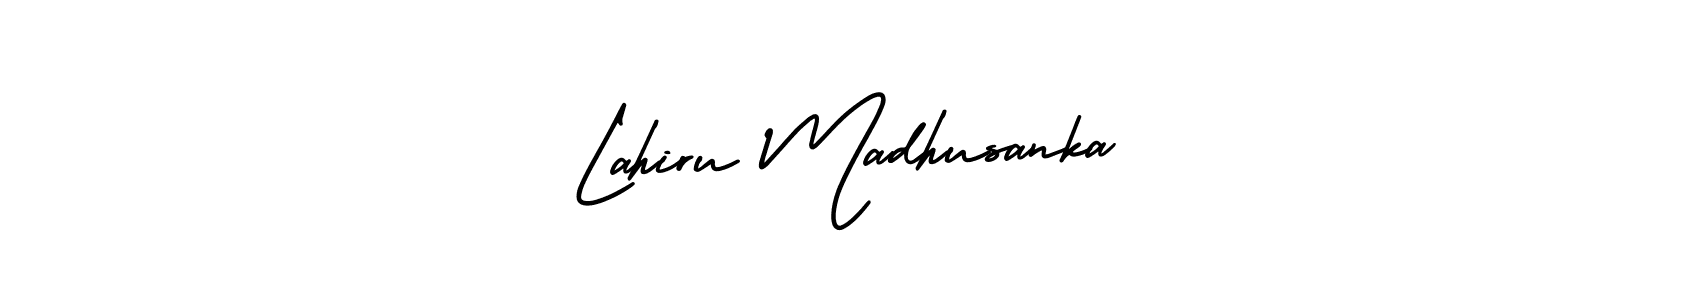 Use a signature maker to create a handwritten signature online. With this signature software, you can design (AmerikaSignatureDemo-Regular) your own signature for name Lahiru Madhusanka. Lahiru Madhusanka signature style 3 images and pictures png